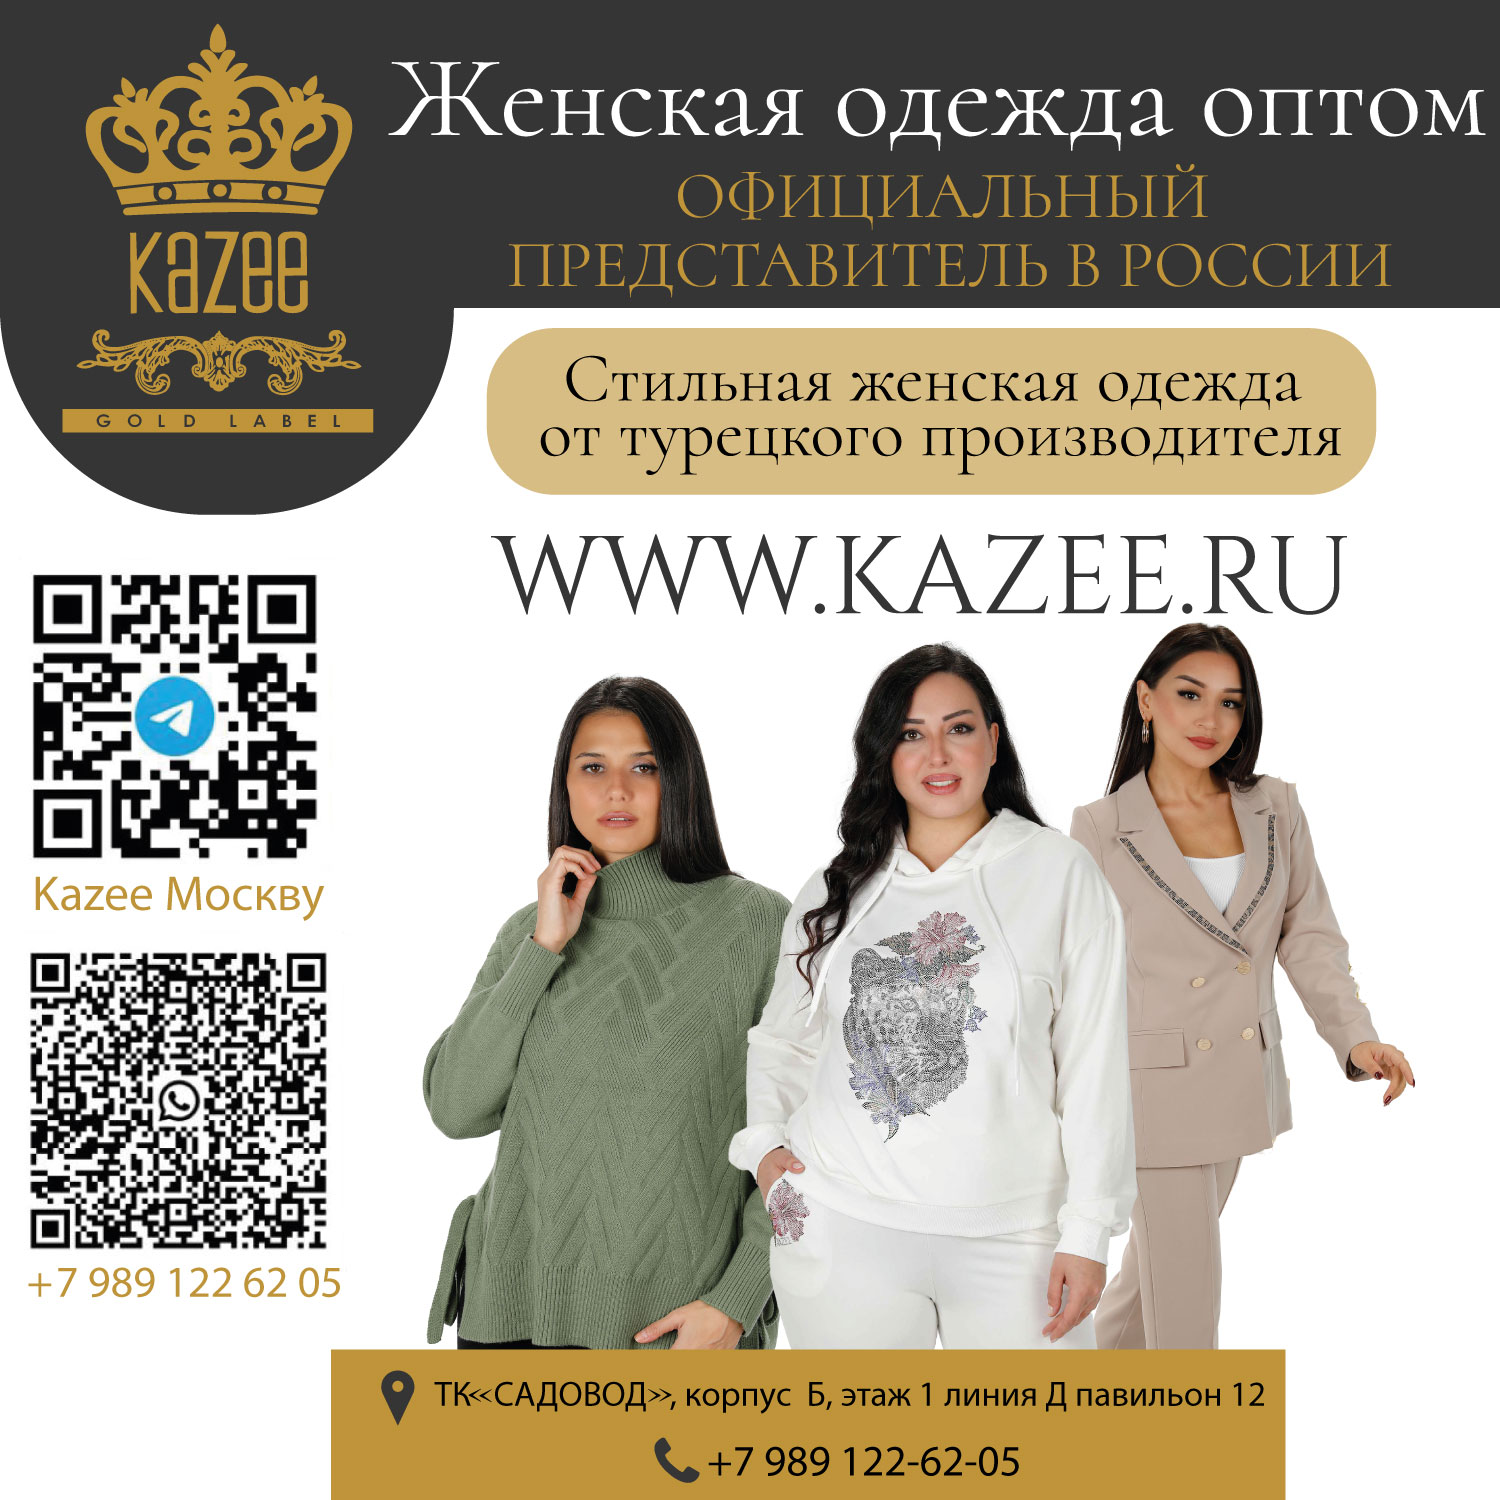 Offizieller Vertreter des KAZEE Store in Russland